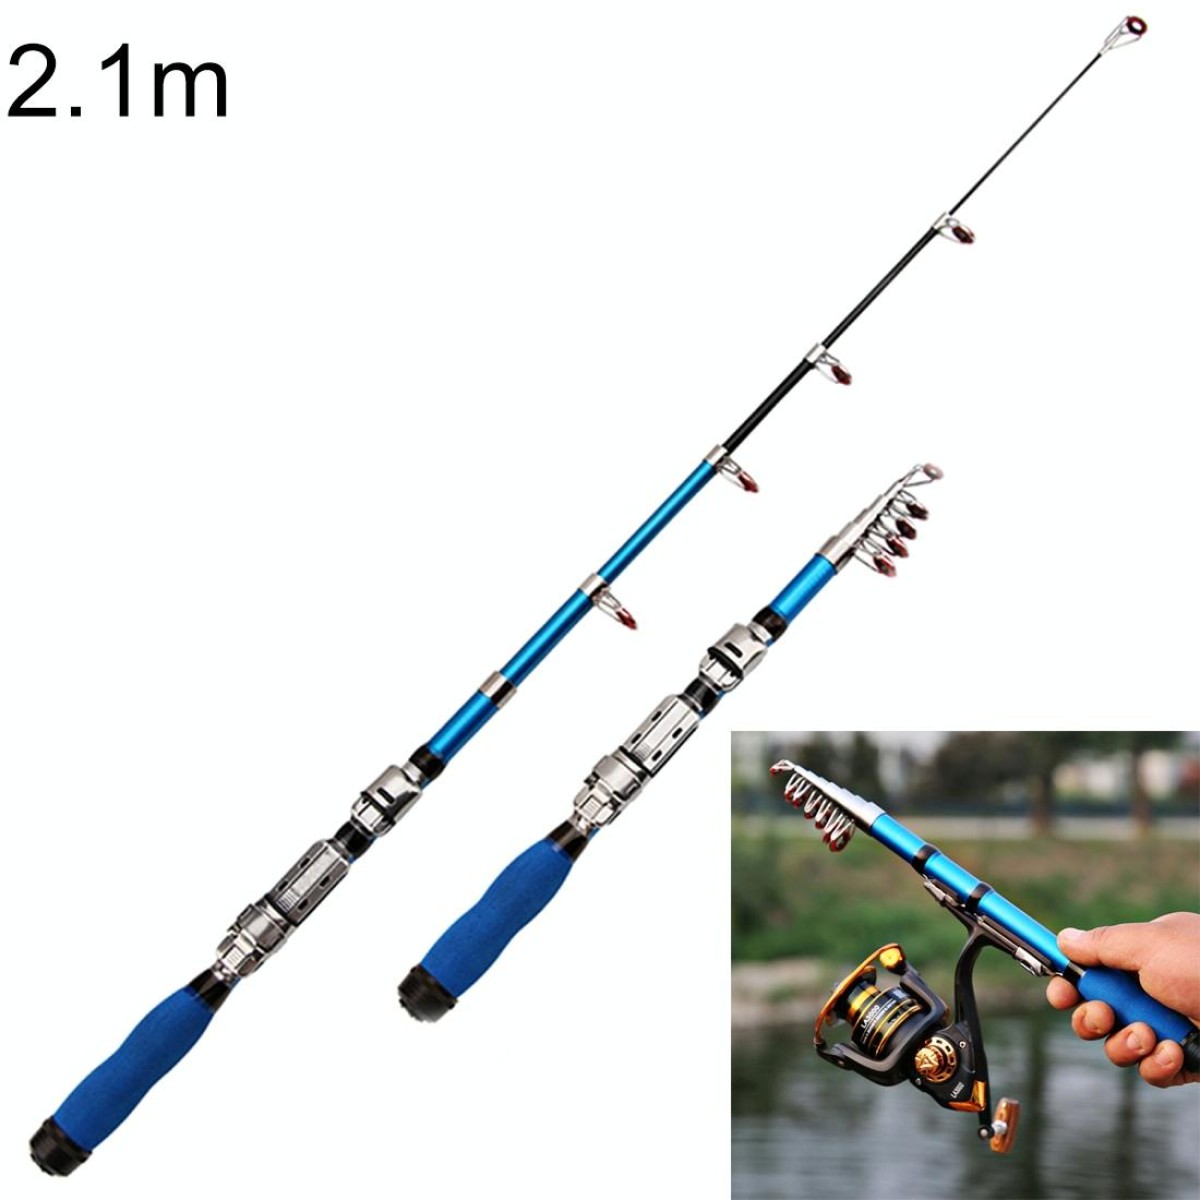 36cm Portable Telescopic Sea Fishing Rod Mini Fishing Pole, Extended Length : 2.1m, Blue Clip Reel Seat